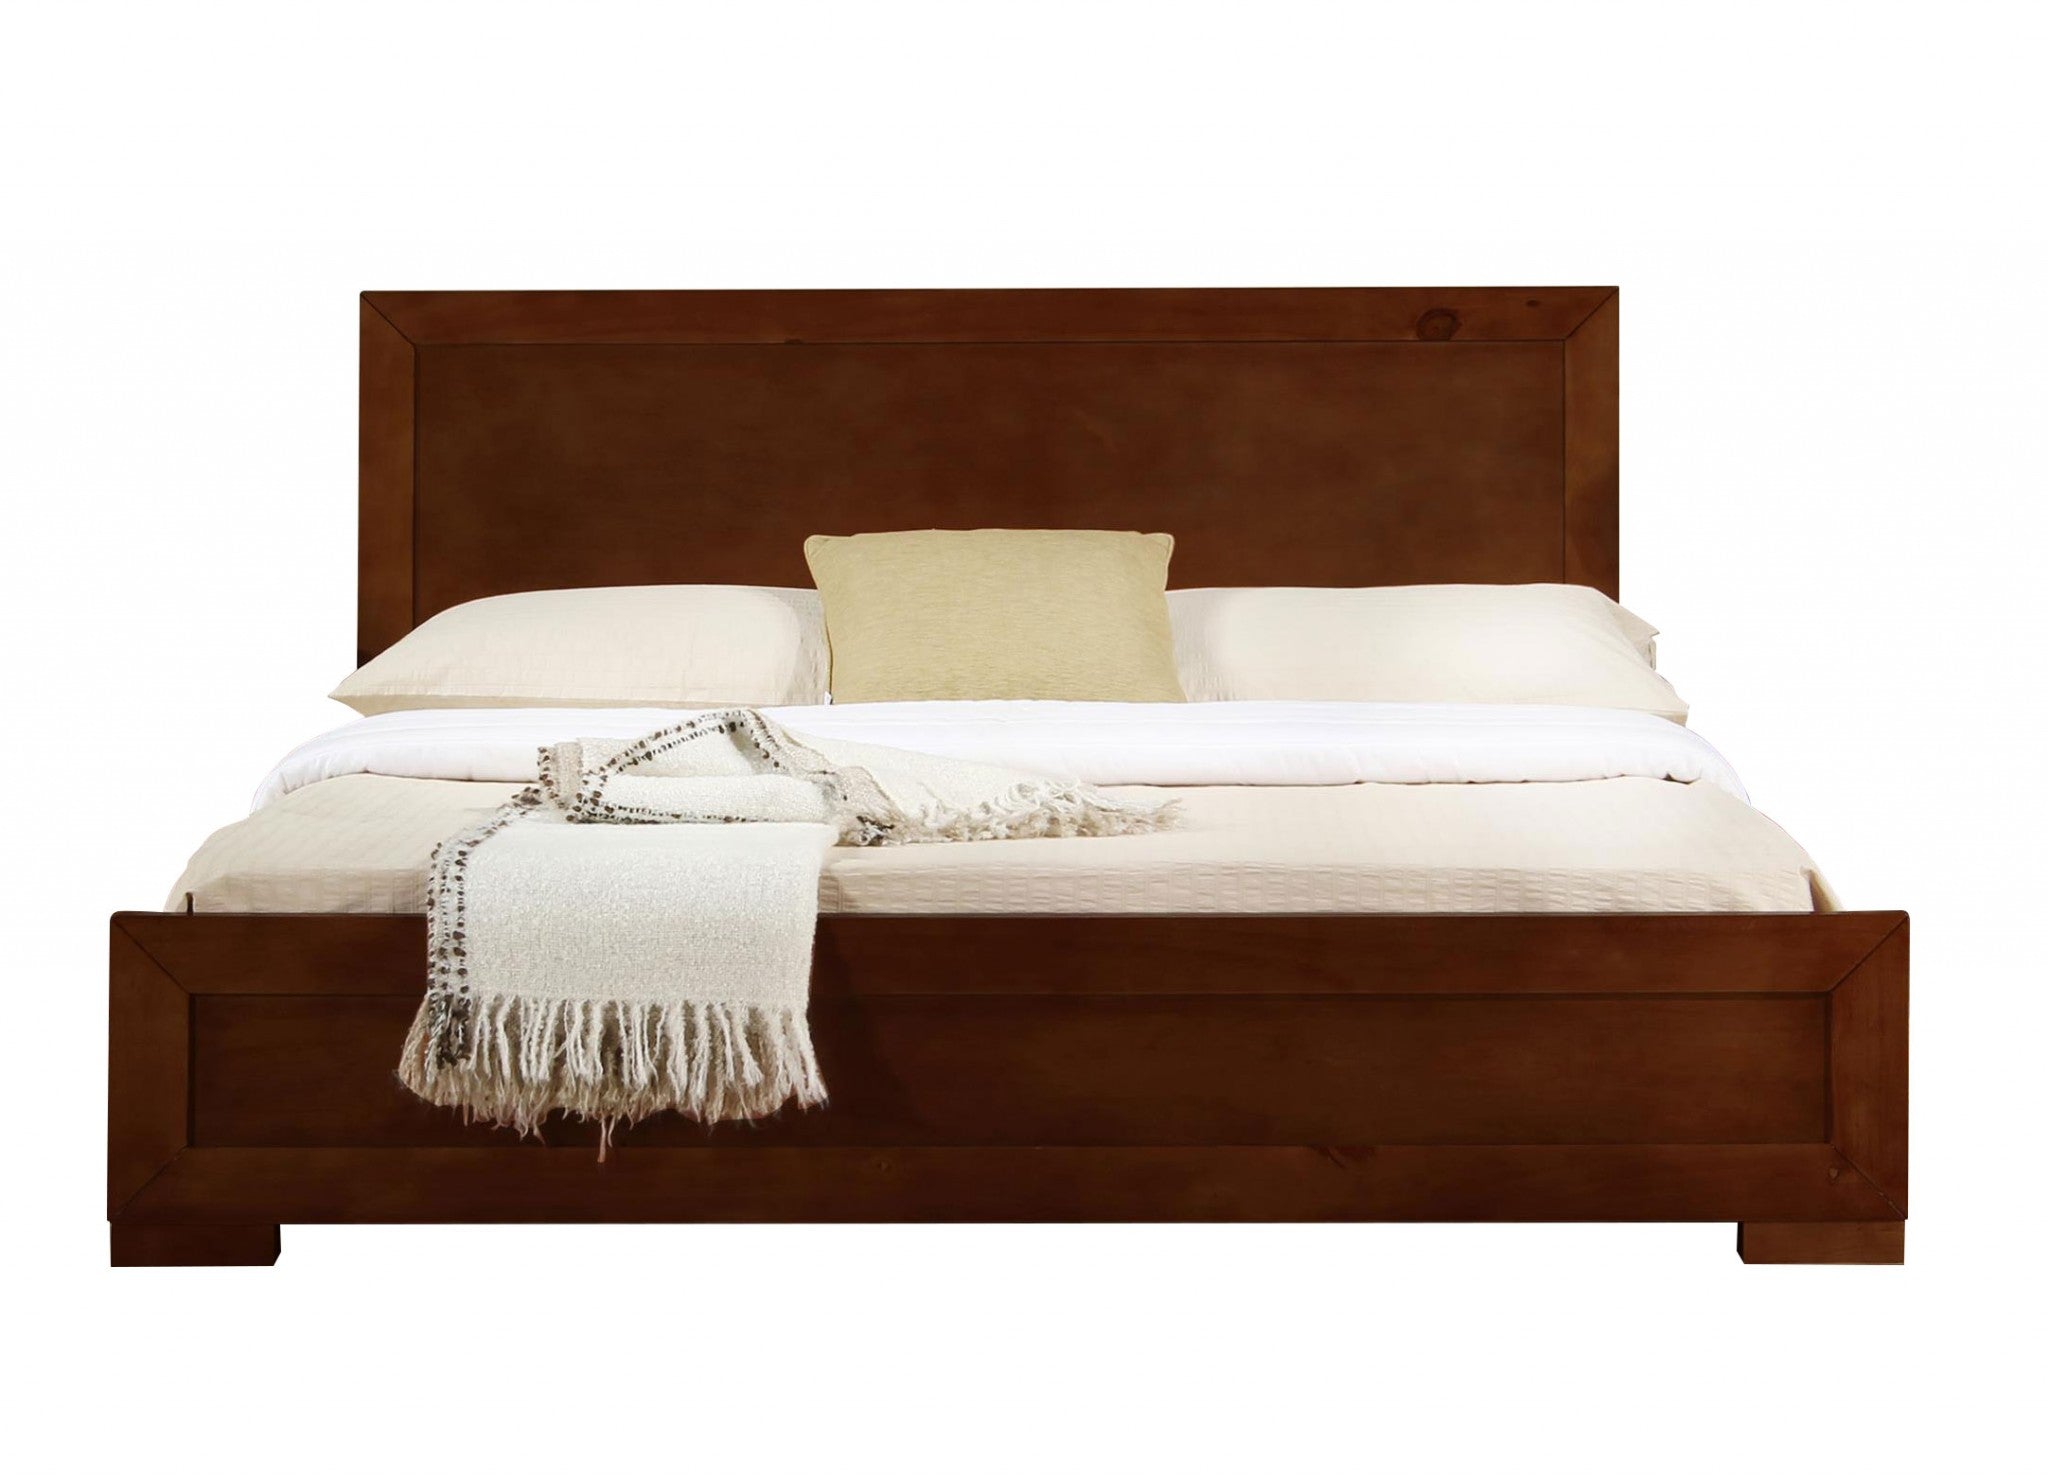 Moma Walnut Wood Platform Queen Bed With Two Nightstands Default Title